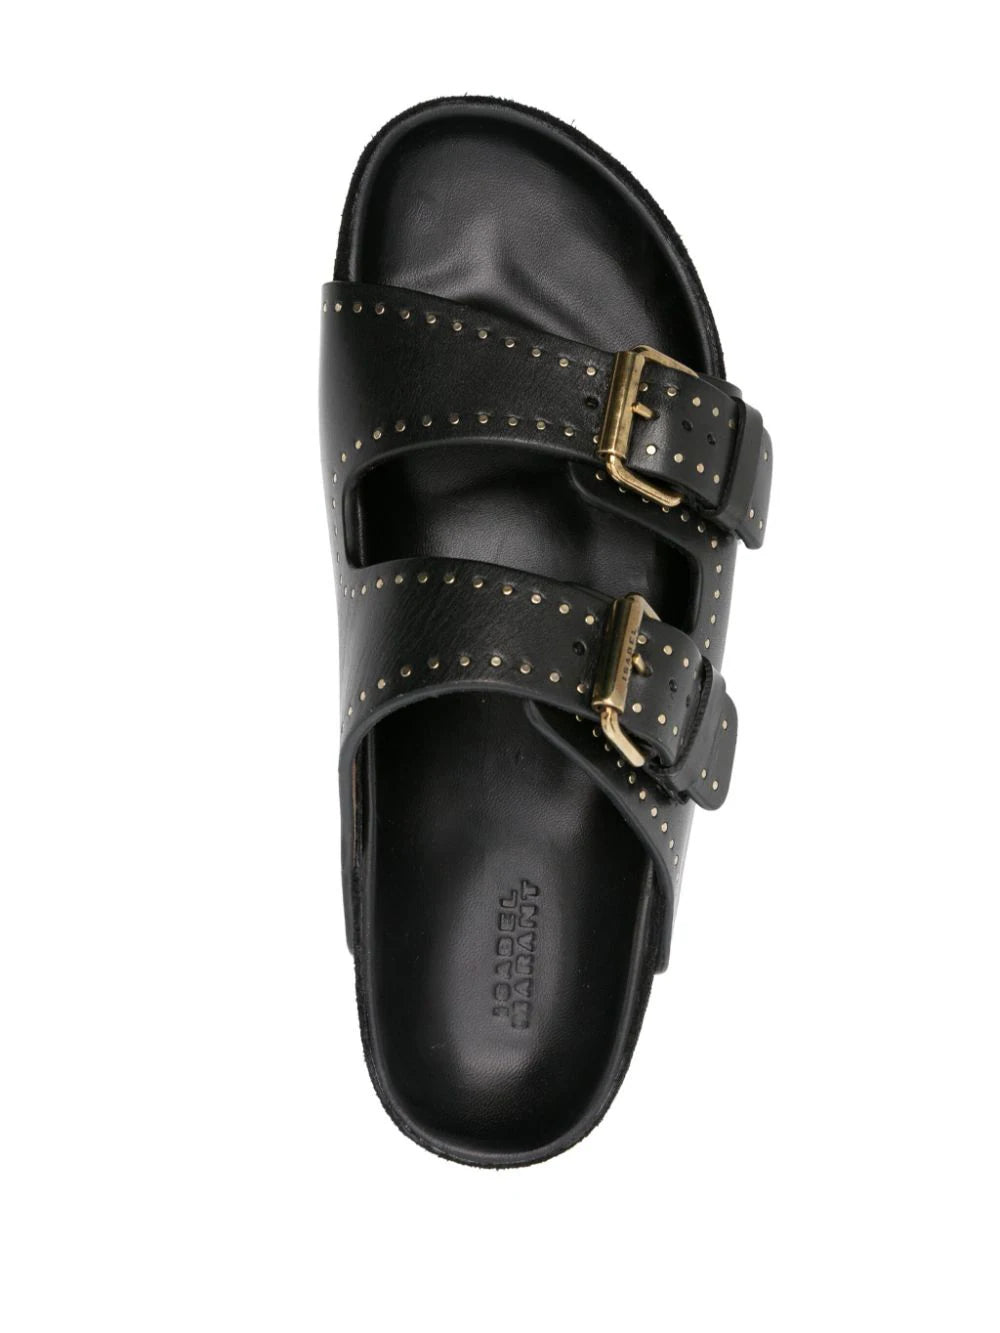 LENNYO sandals, black